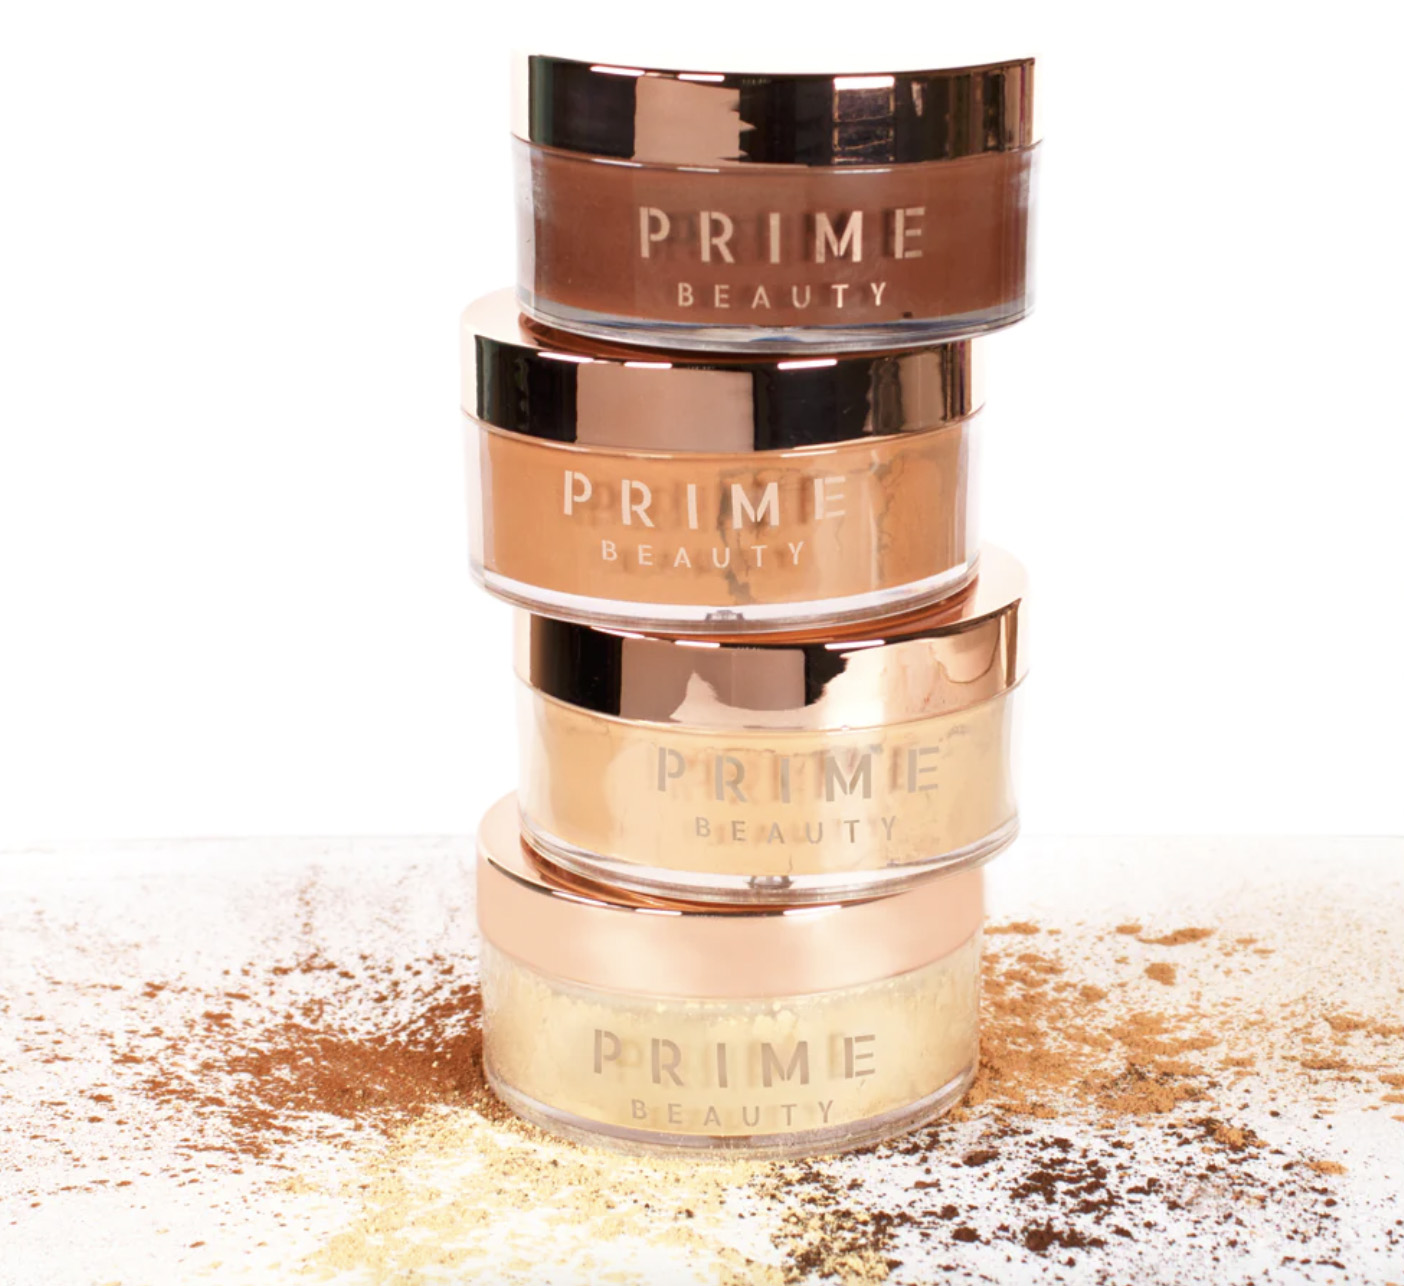 Prime Beauty Cosmetics makeup powders